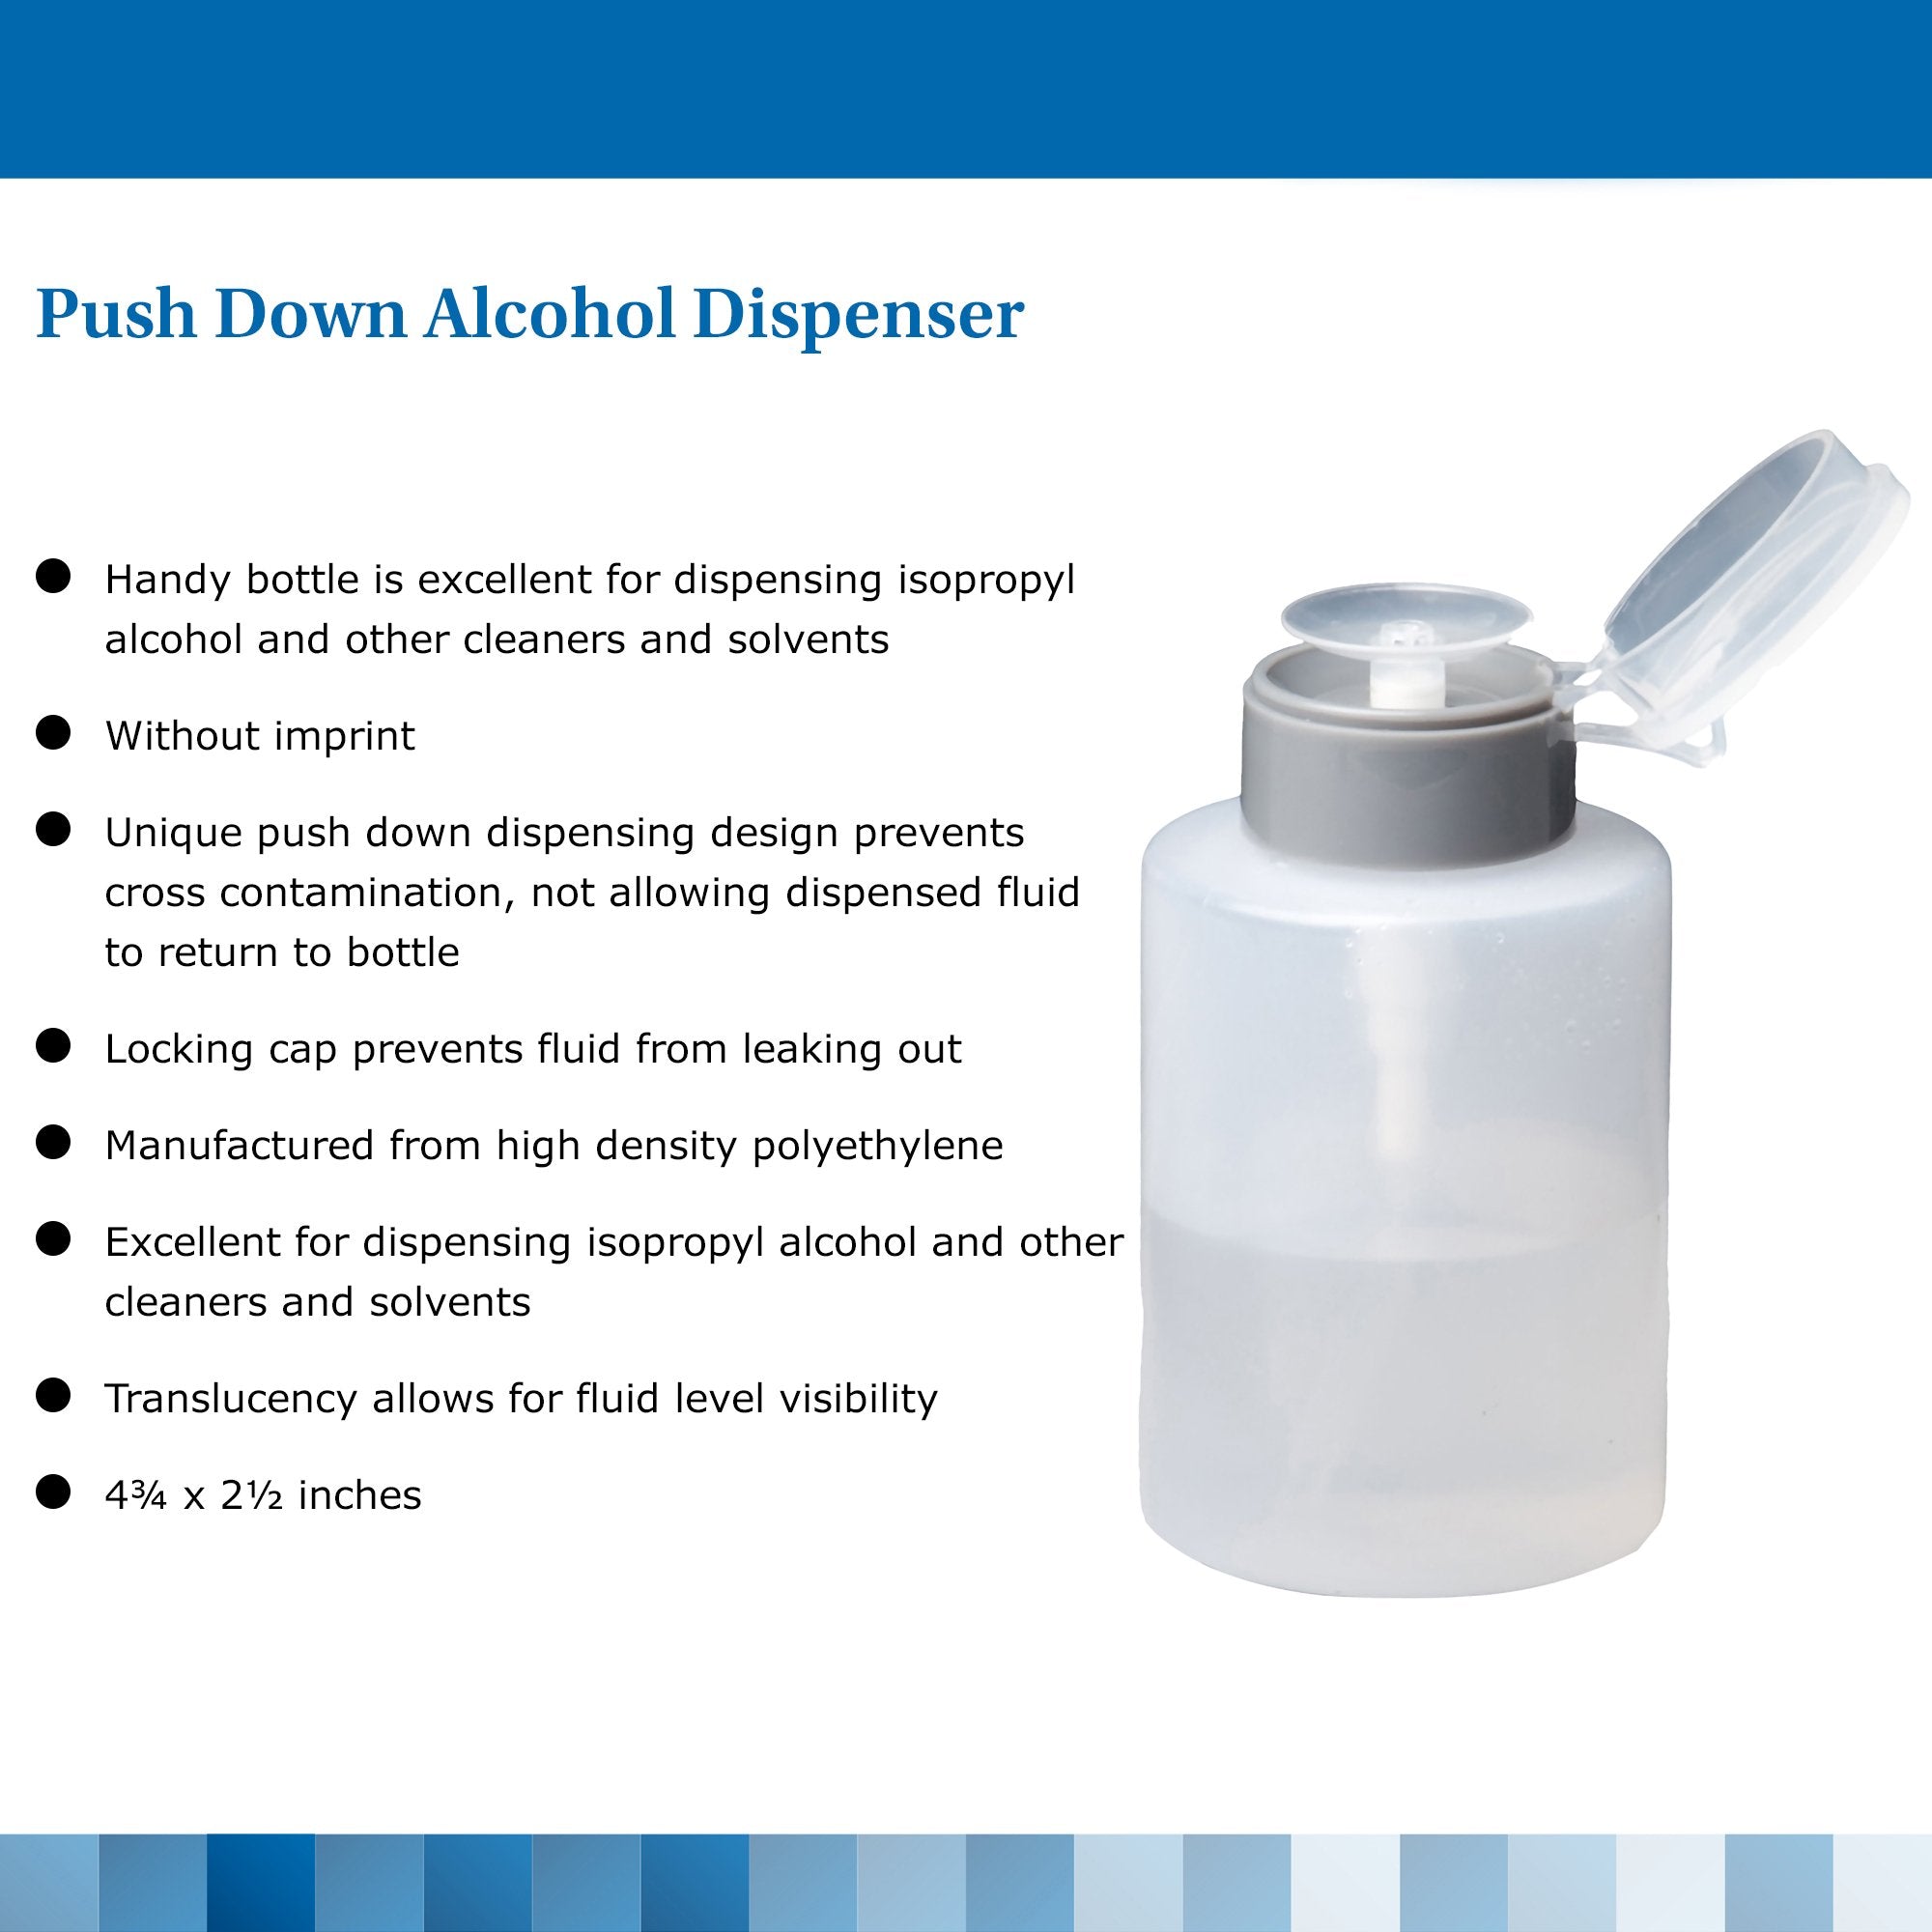 Alcohol Dispenser McKesson Polyethylene Translucent 9 oz.